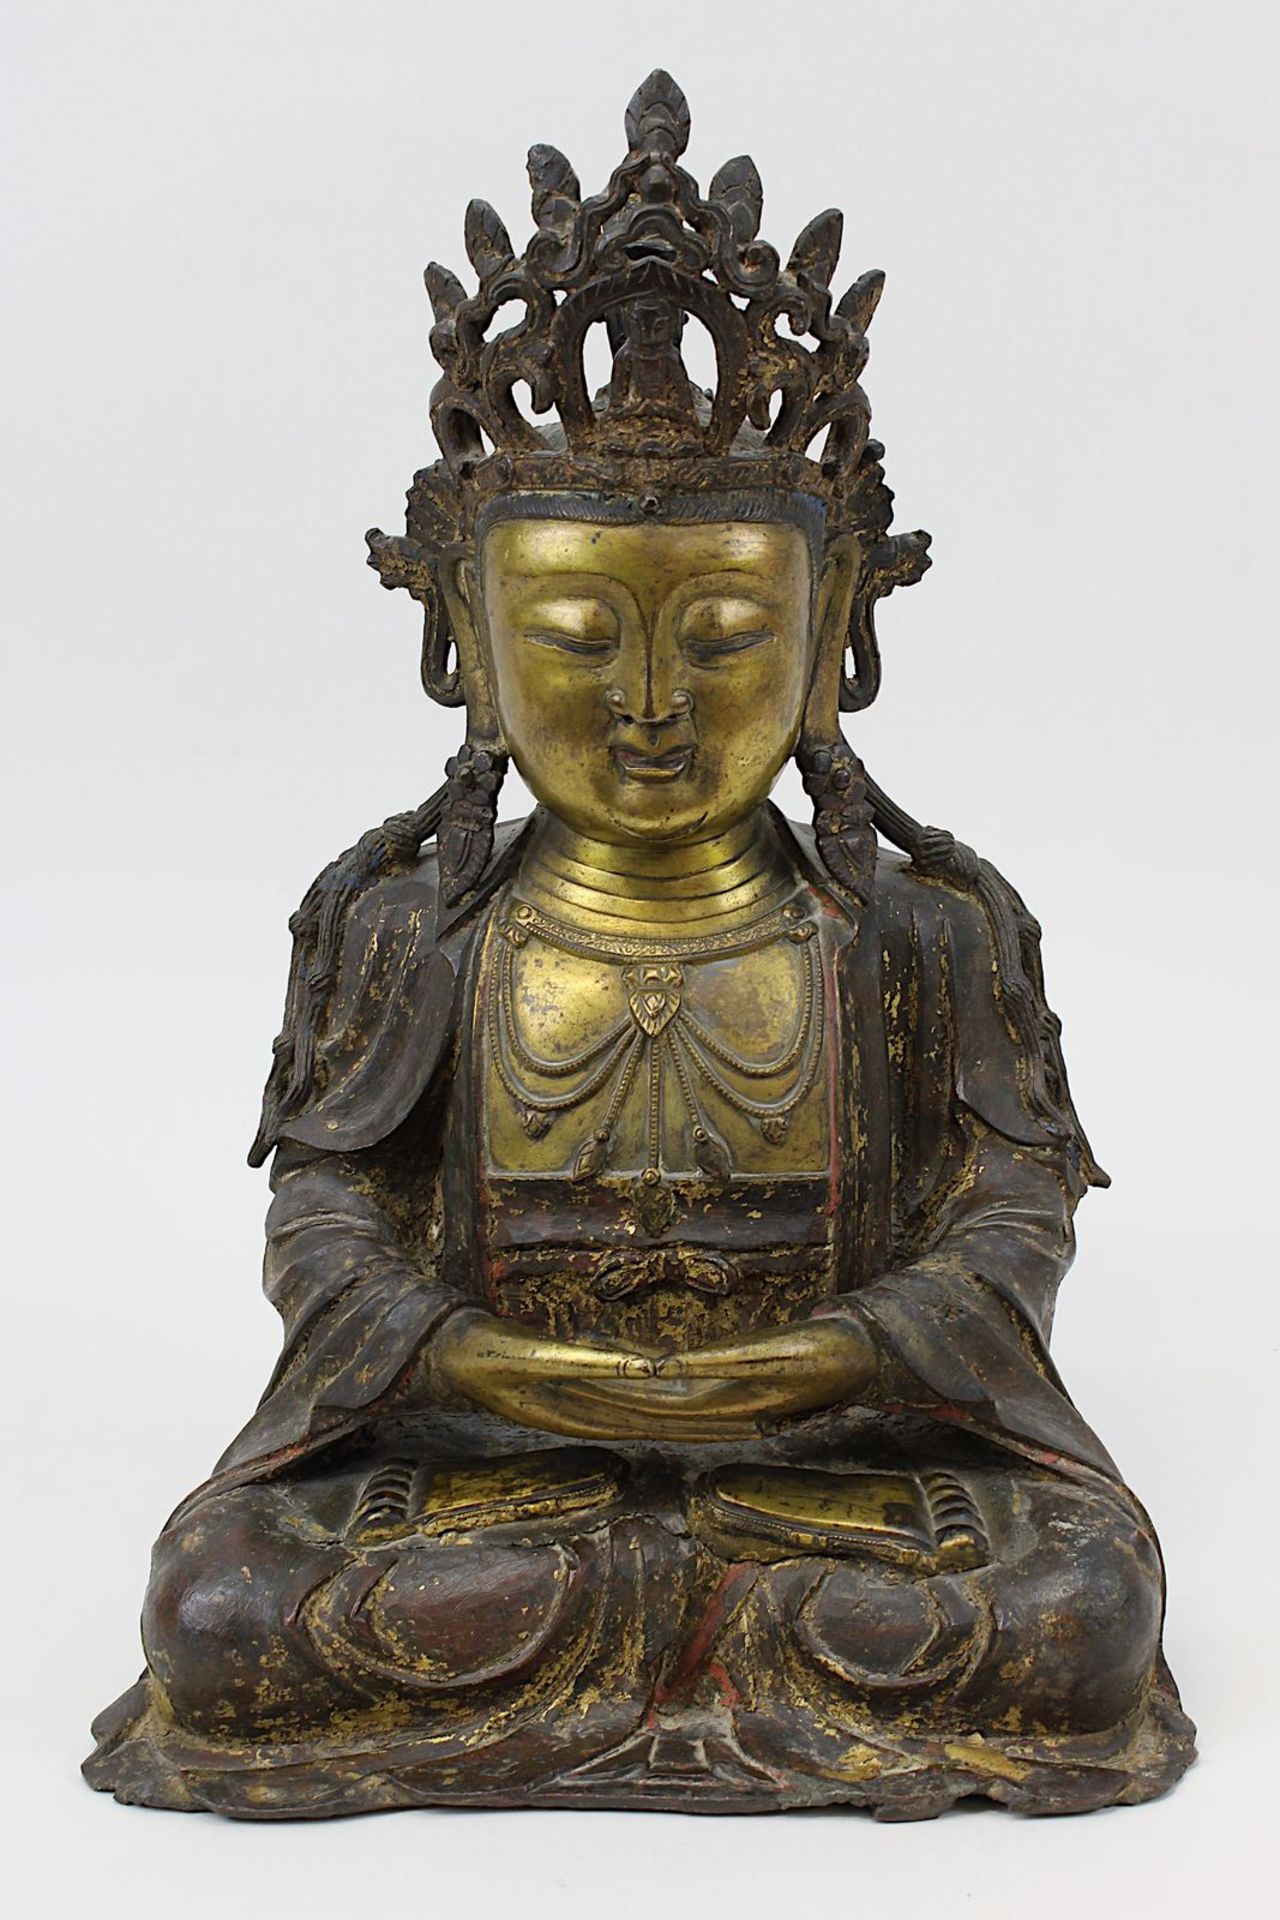 Großer Buddha aus Bronze, China 17./18. Jh., Ming-Dynastie, Guss in verlorener Form, Buddha in